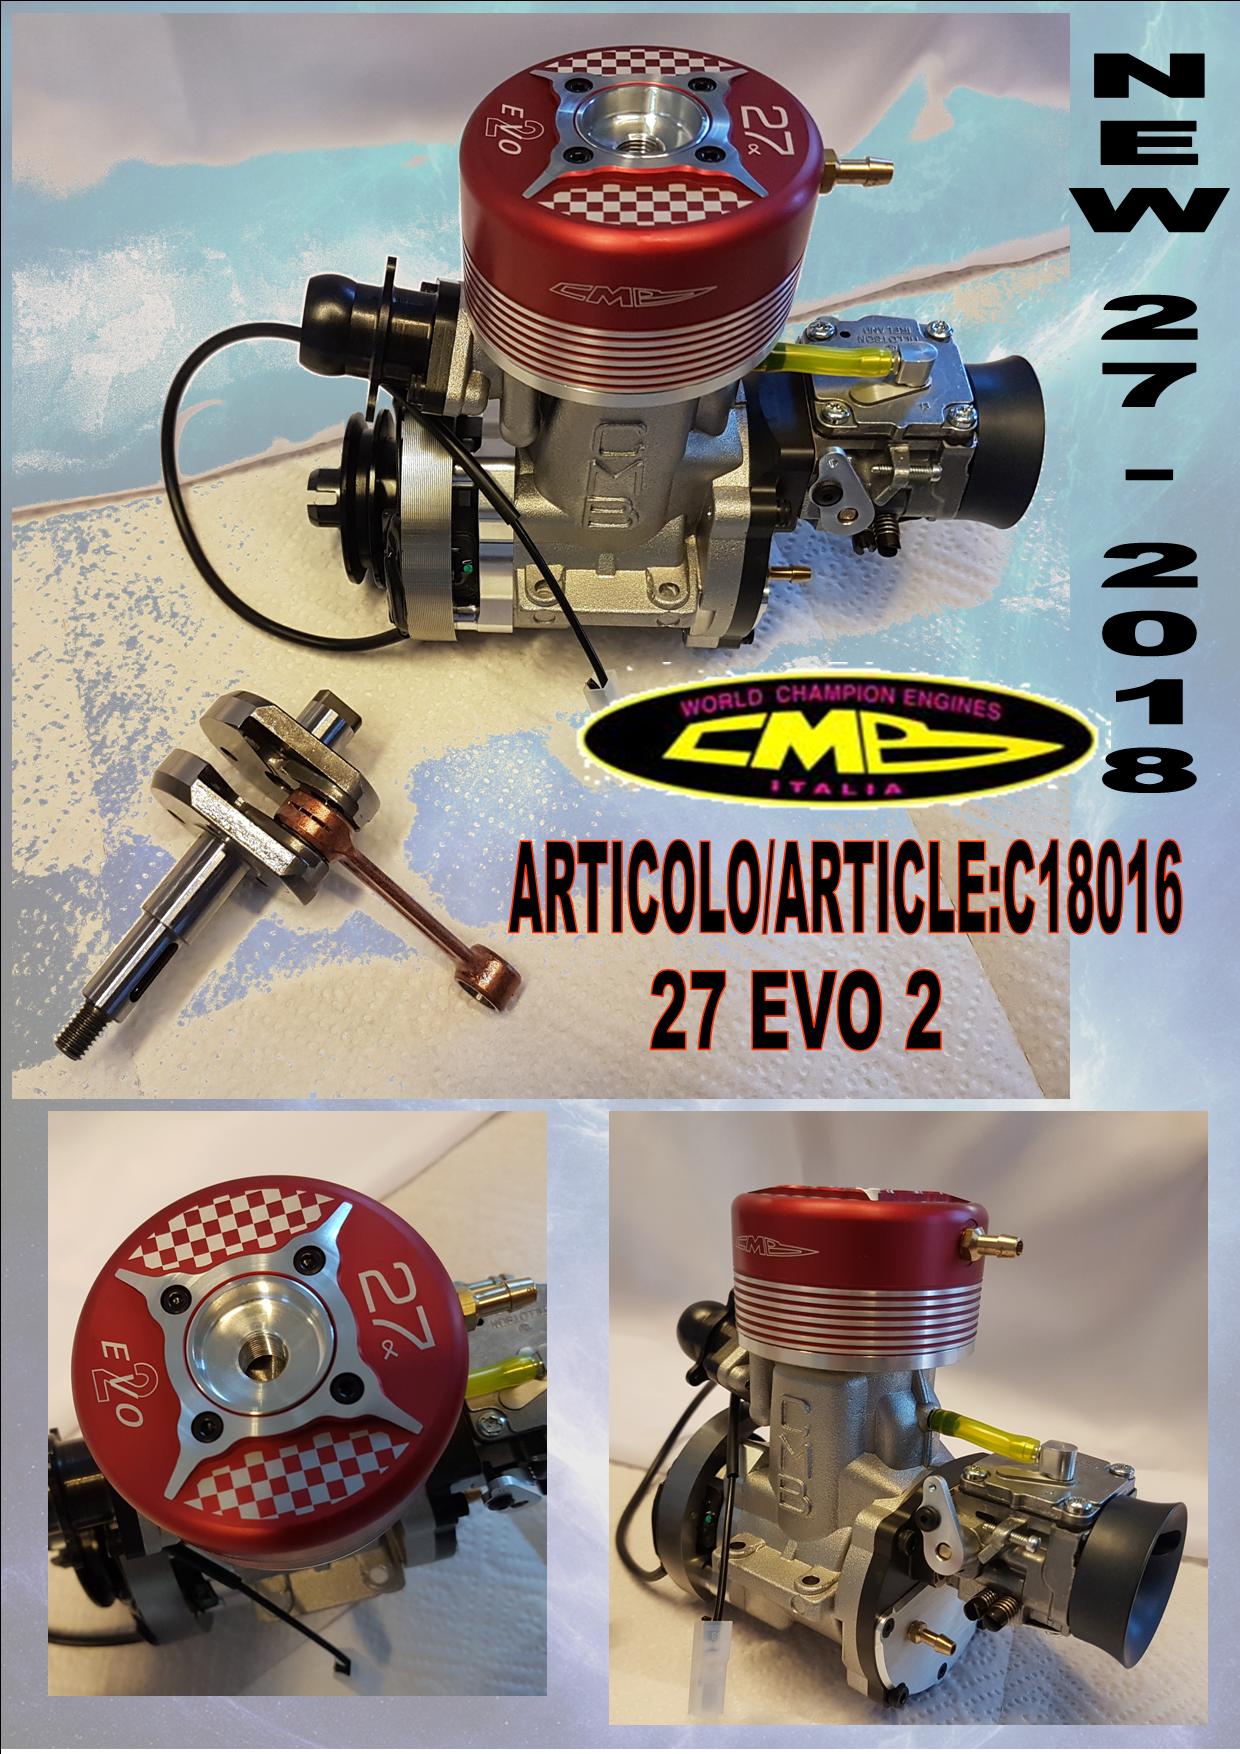 cmb nitro engines